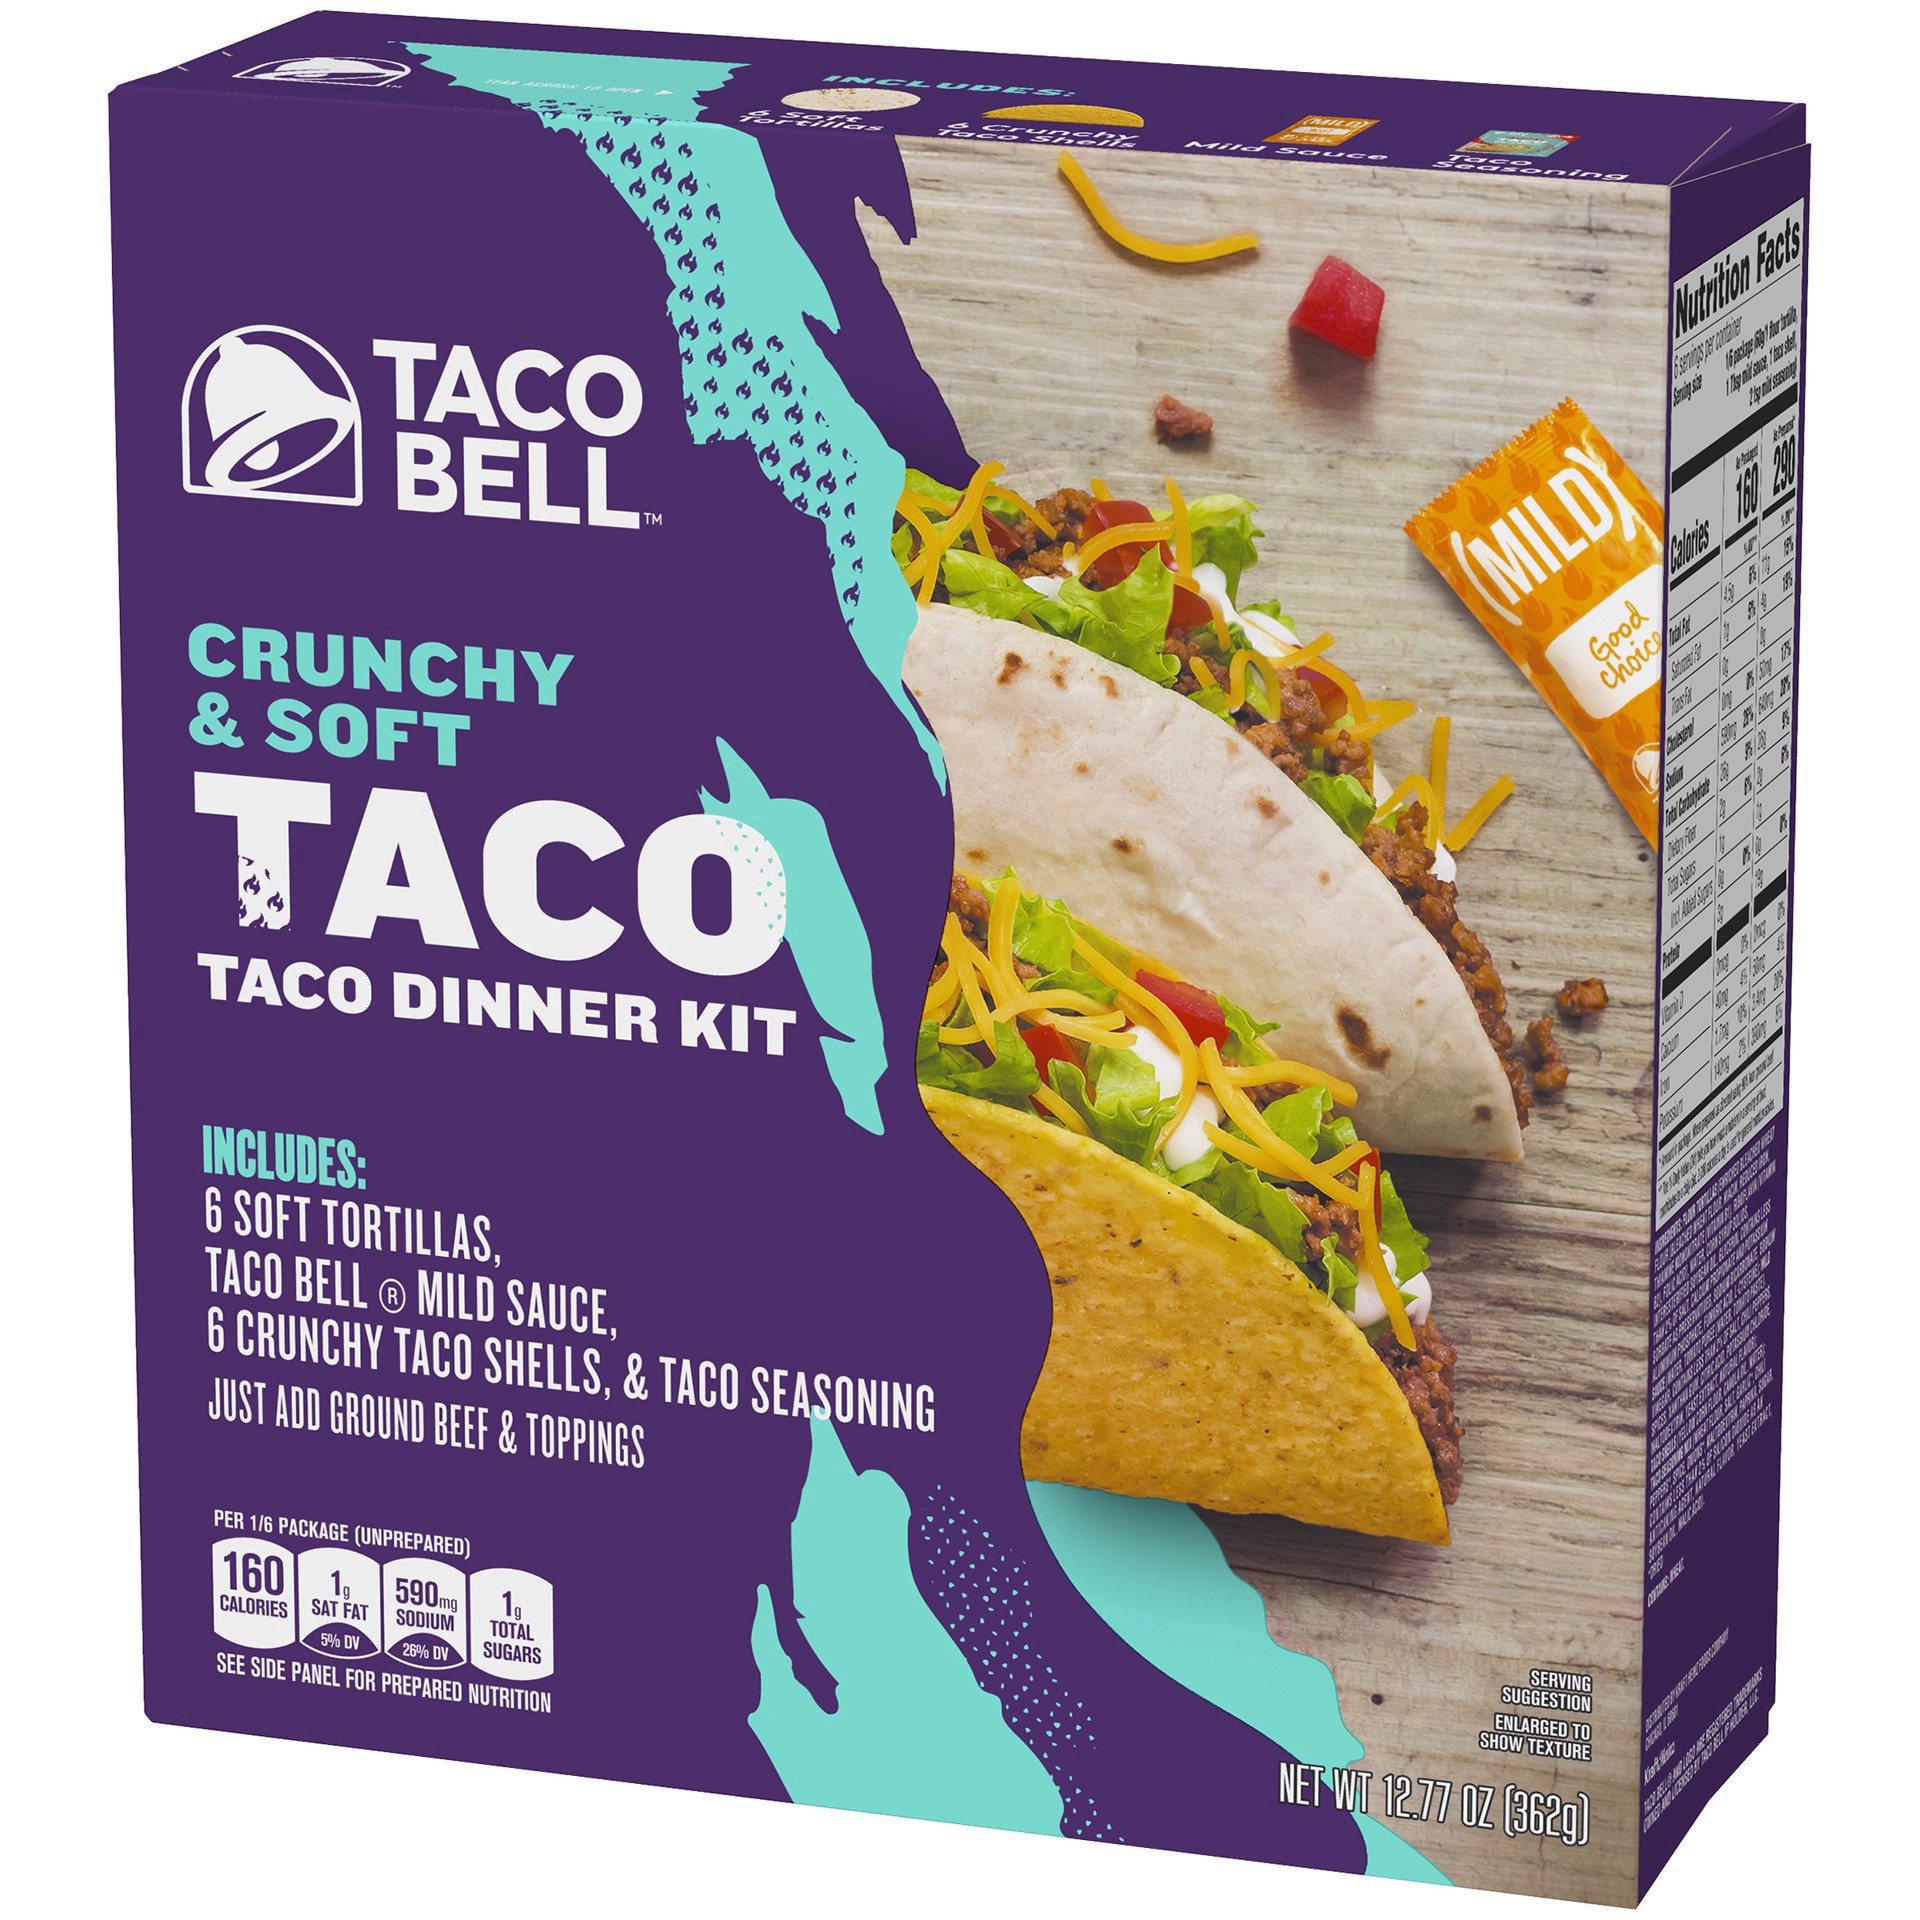 slide 69 of 101, Taco Bell Crunchy & Soft Taco Cravings Kit with 6 Soft Tortillas, 6 Crunchy Taco Shells, Taco Bell Mild Sauce & Seasoning, 12.77 oz Box, 1 ct